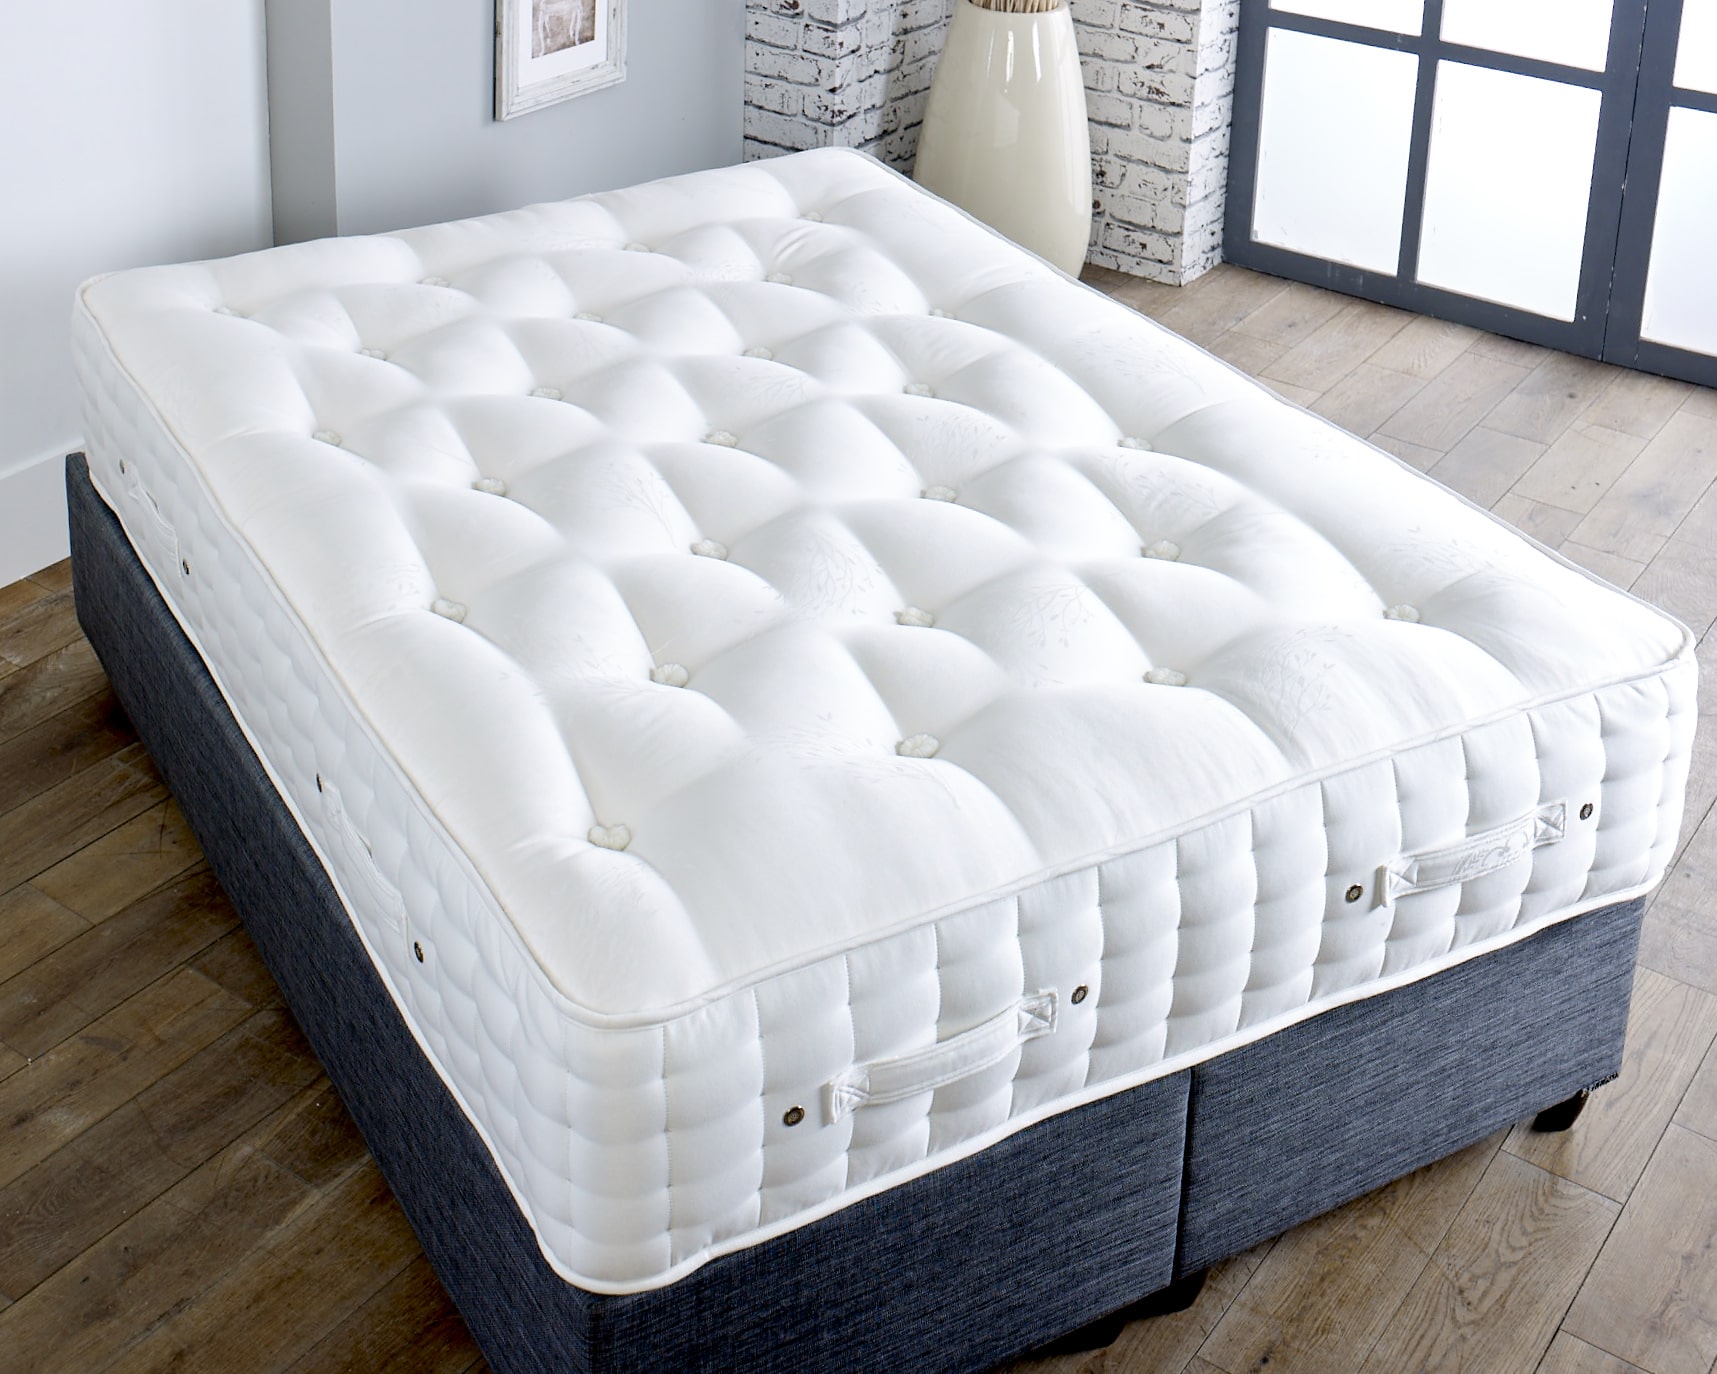 3000 regale pocket mattress review